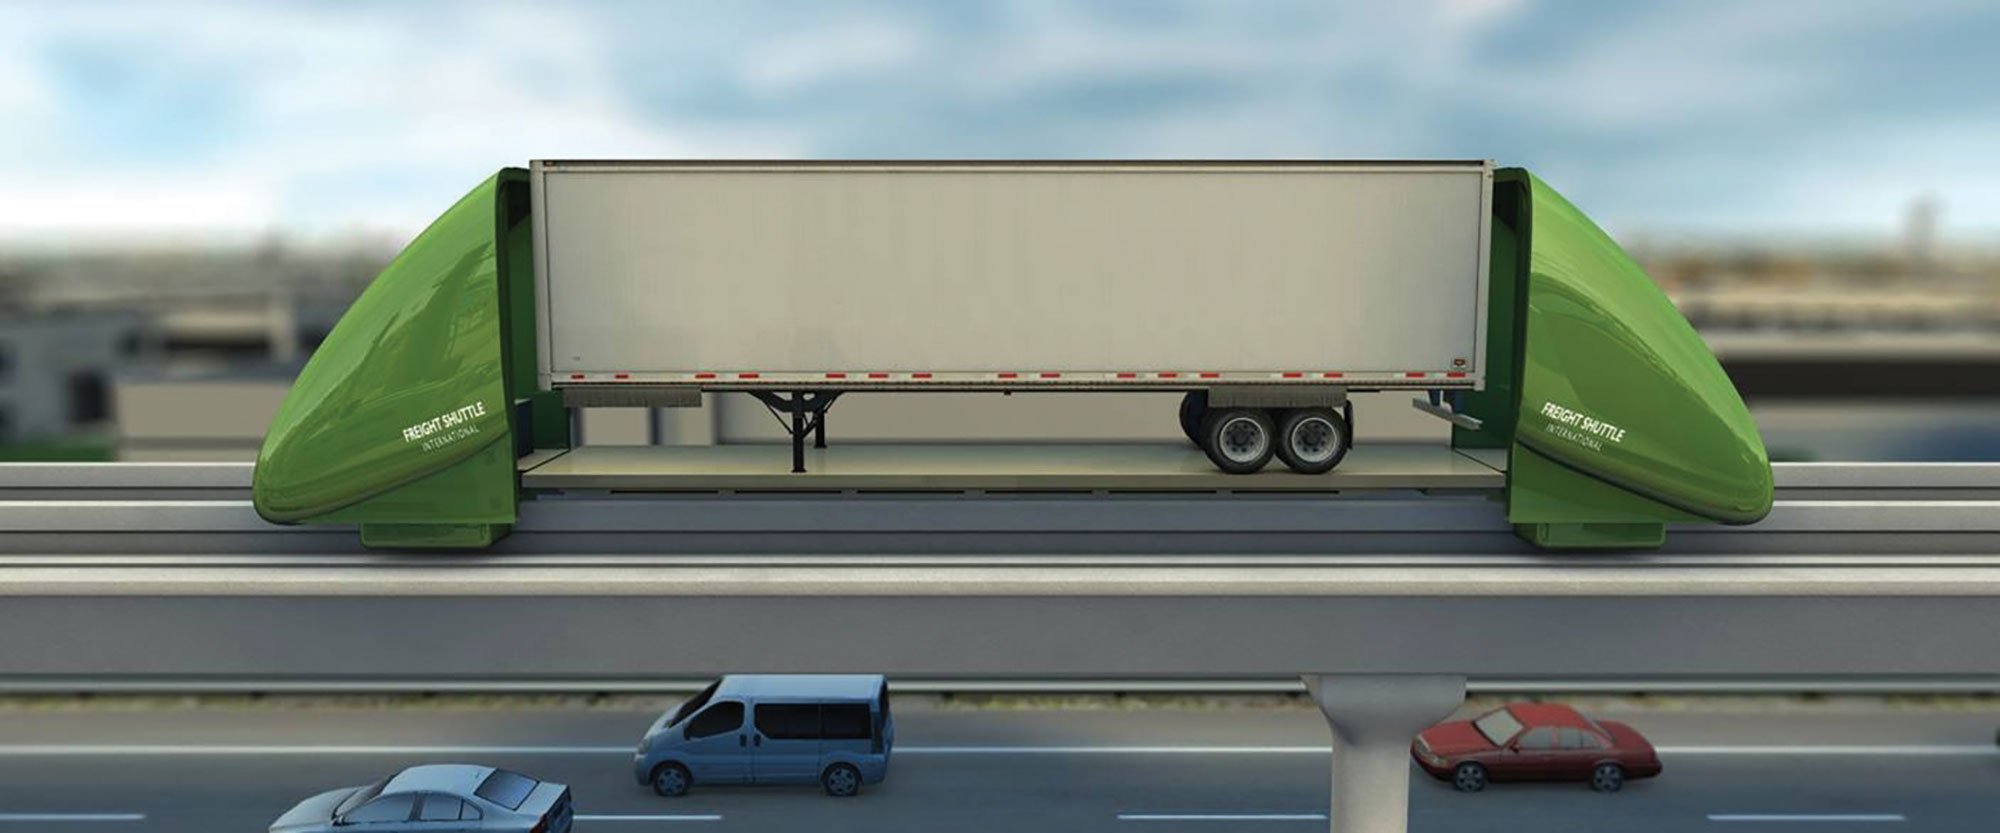 Rail freight transport of the future - illustration